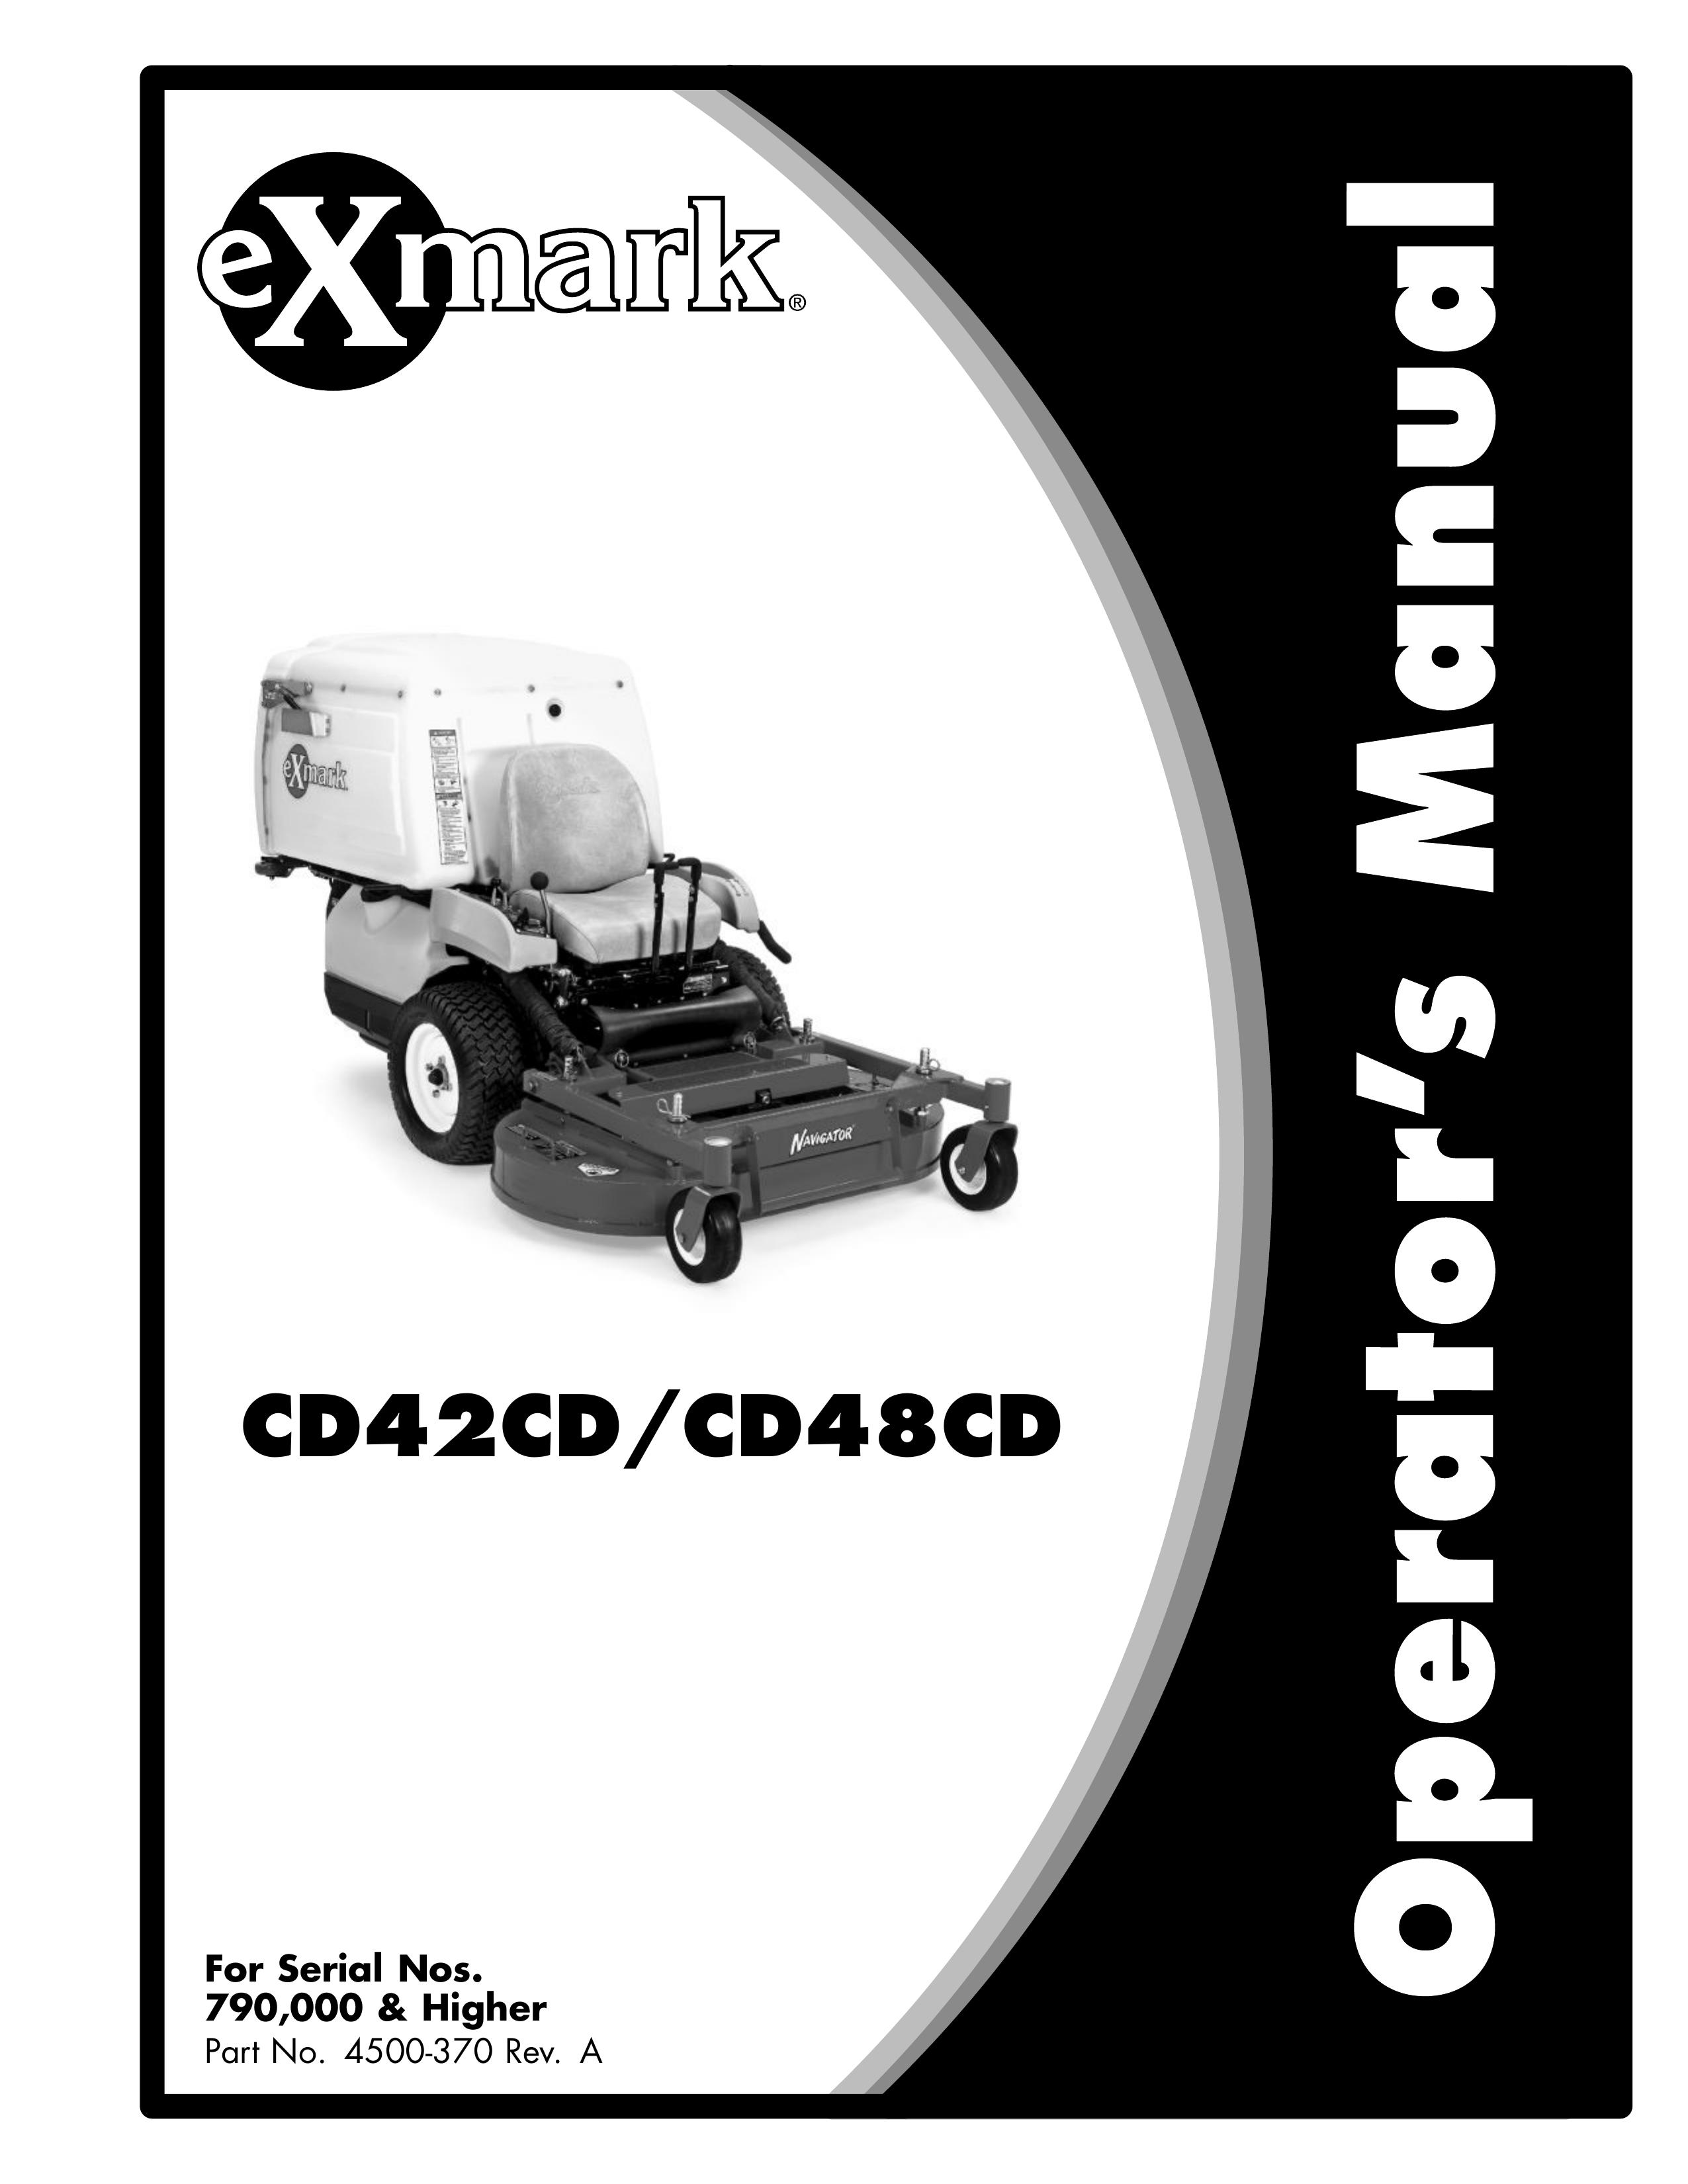 Exmark 4500-370 Lawn Mower User Manual